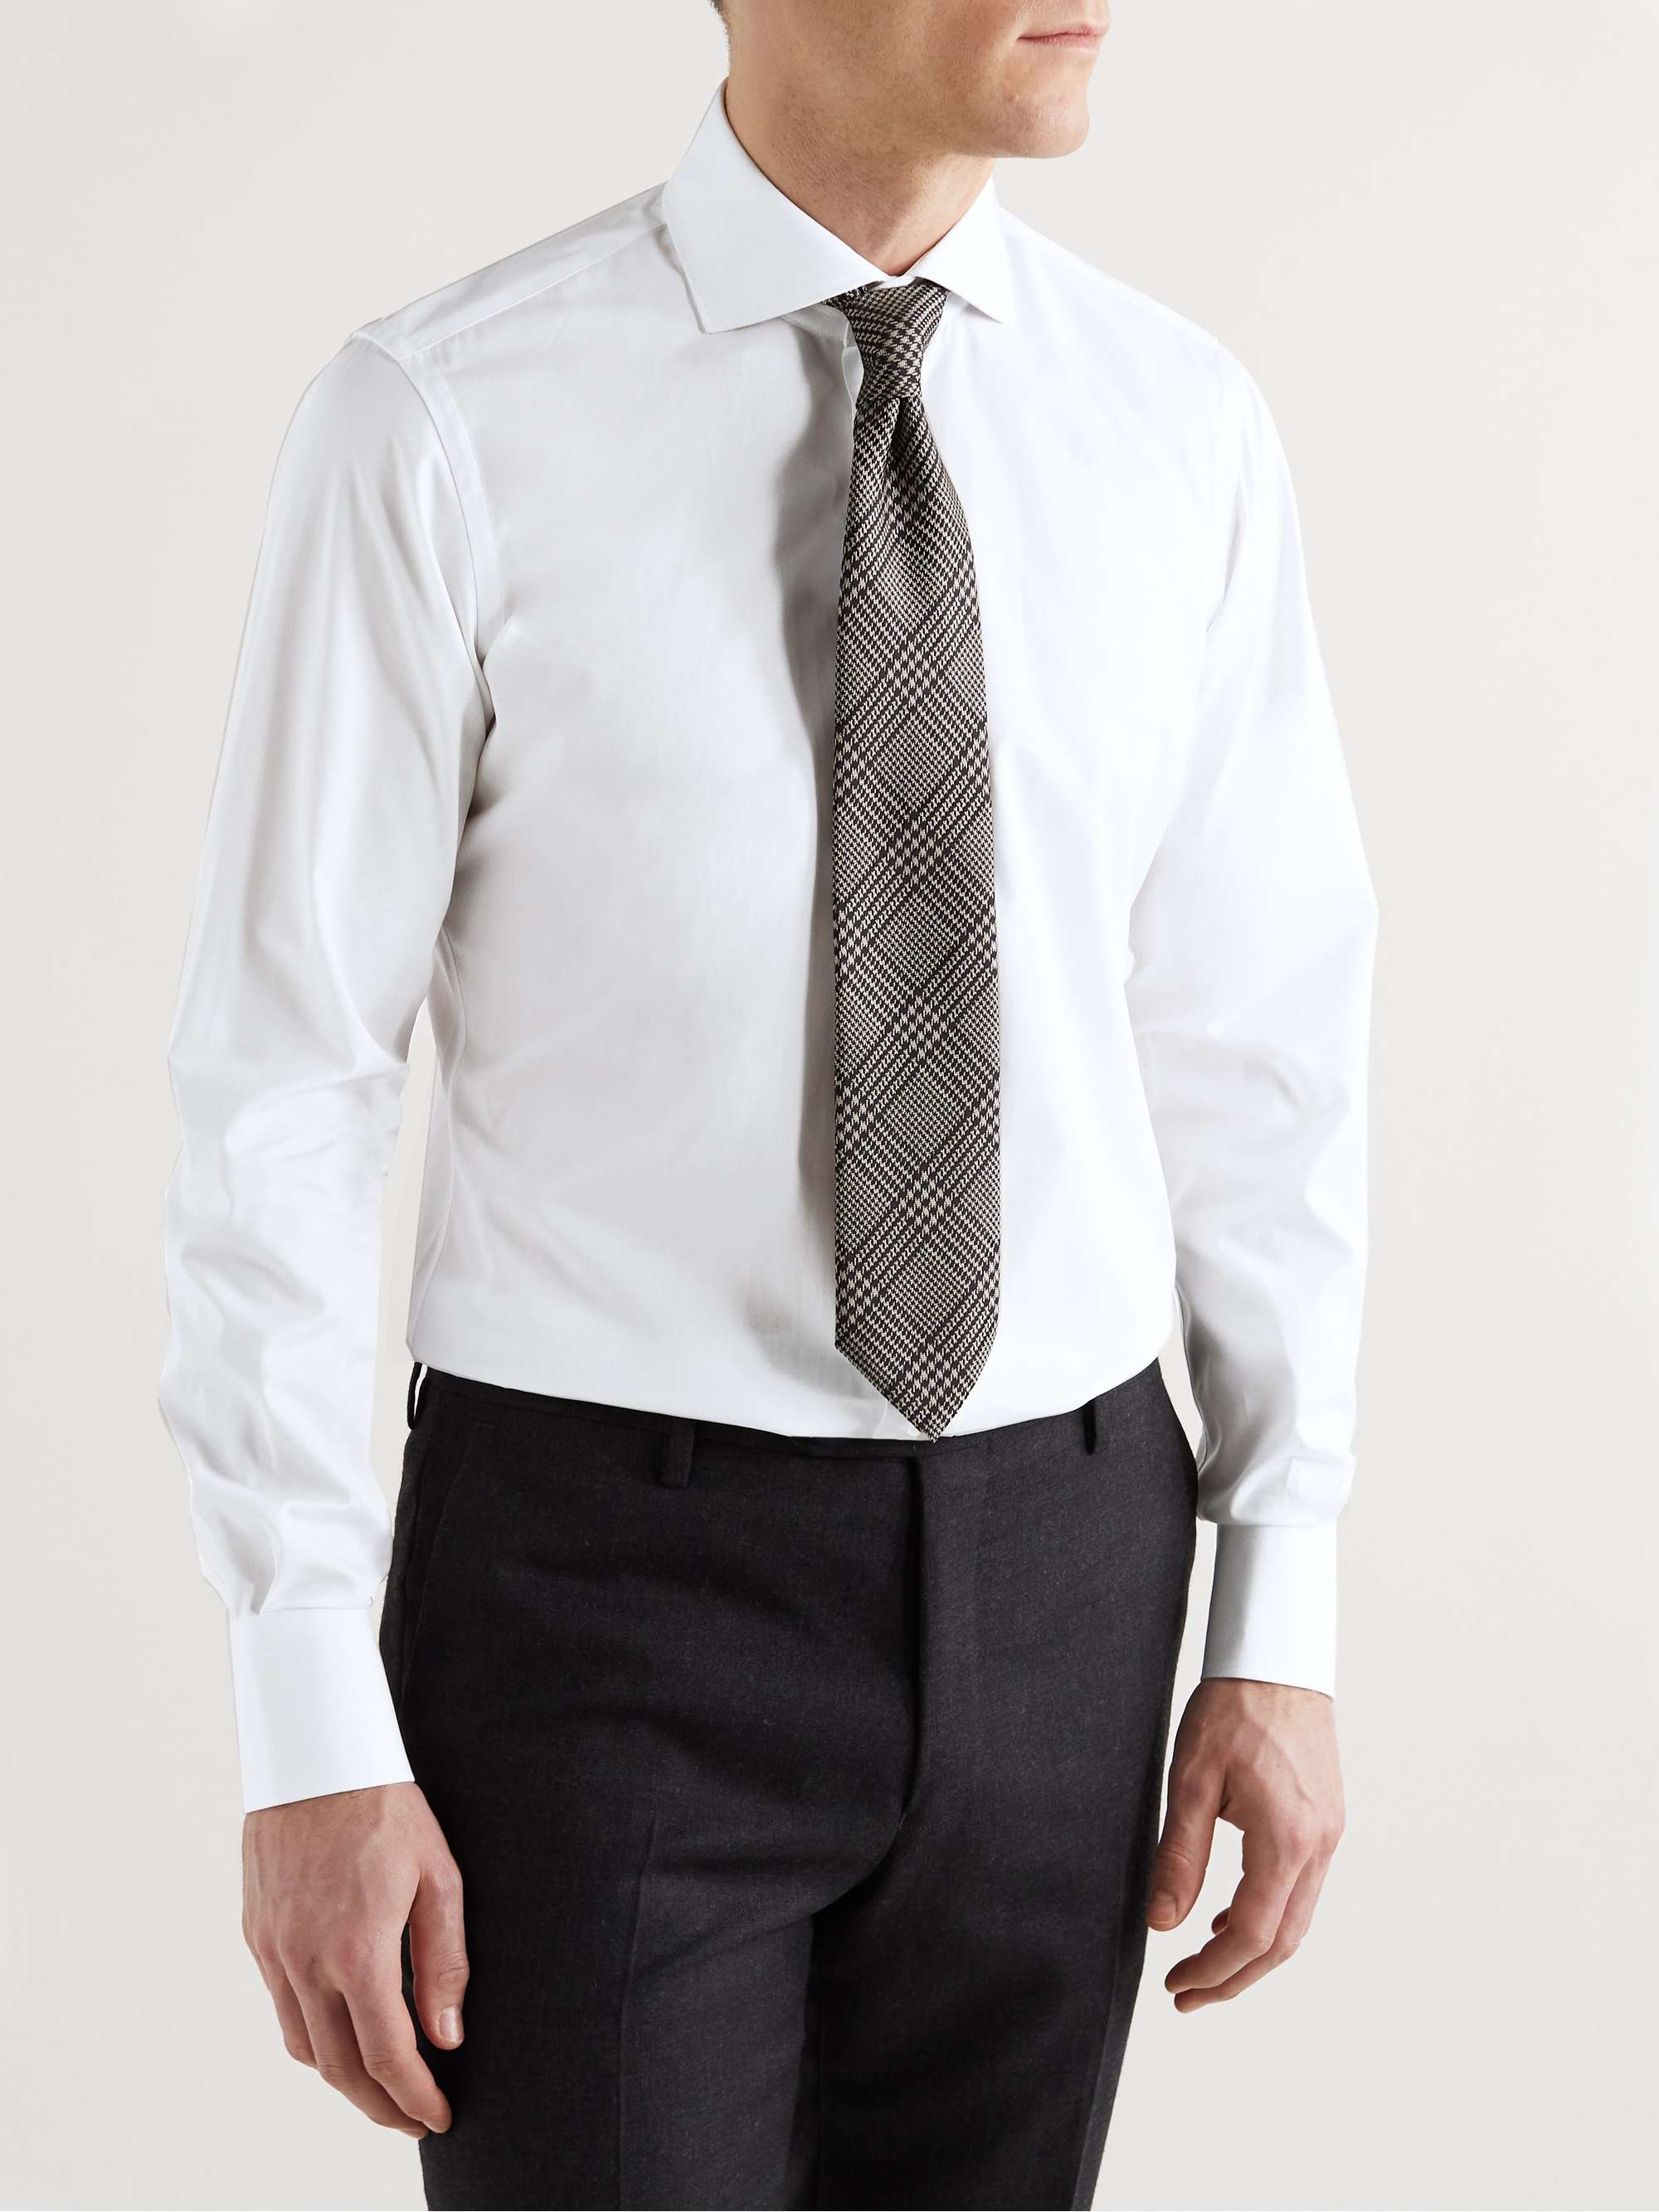 THOM SWEENEY Slim-Fit Cutaway-Collar Cotton-Poplin Shirt